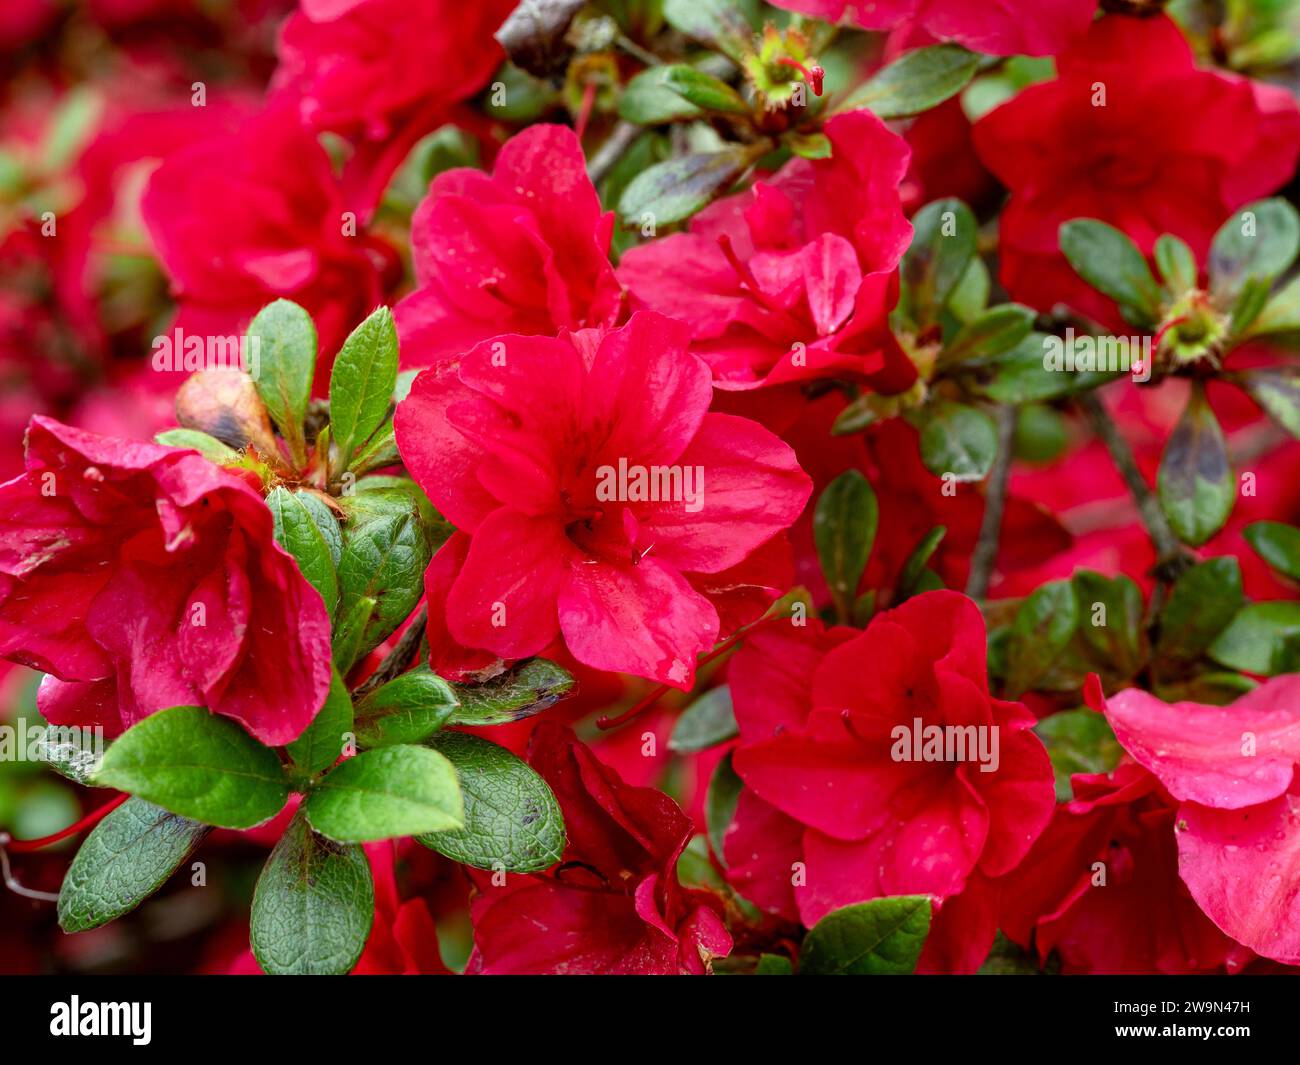 Red evergreen azalea flowers on a garden shrub Stock Photo